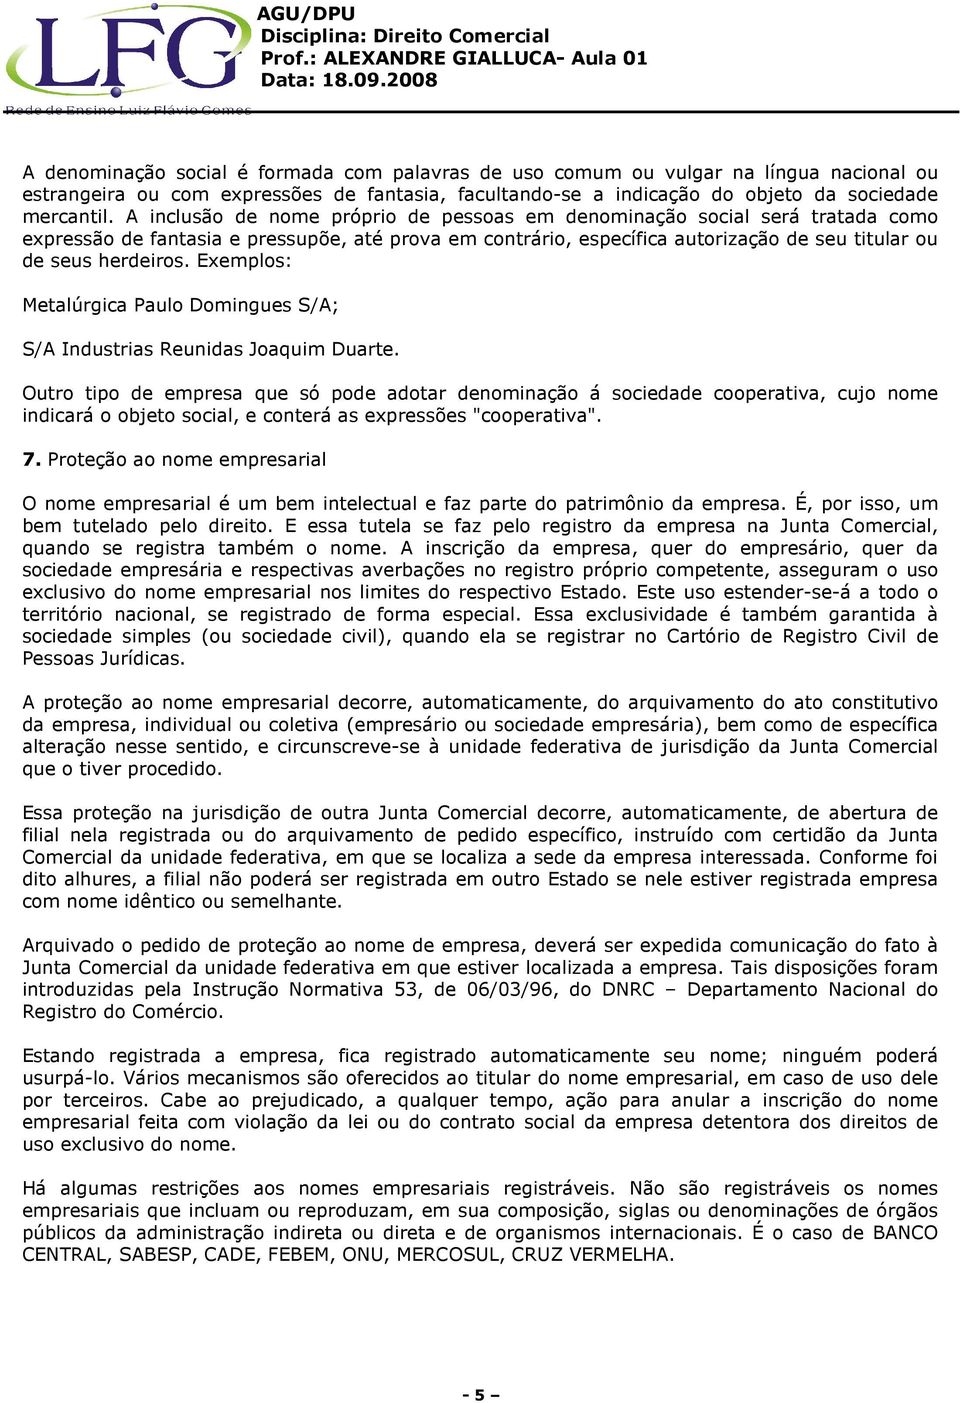 Exemplos: Metalúrgica Paulo Domingues S/A; S/A Industrias Reunidas Joaquim Duarte.